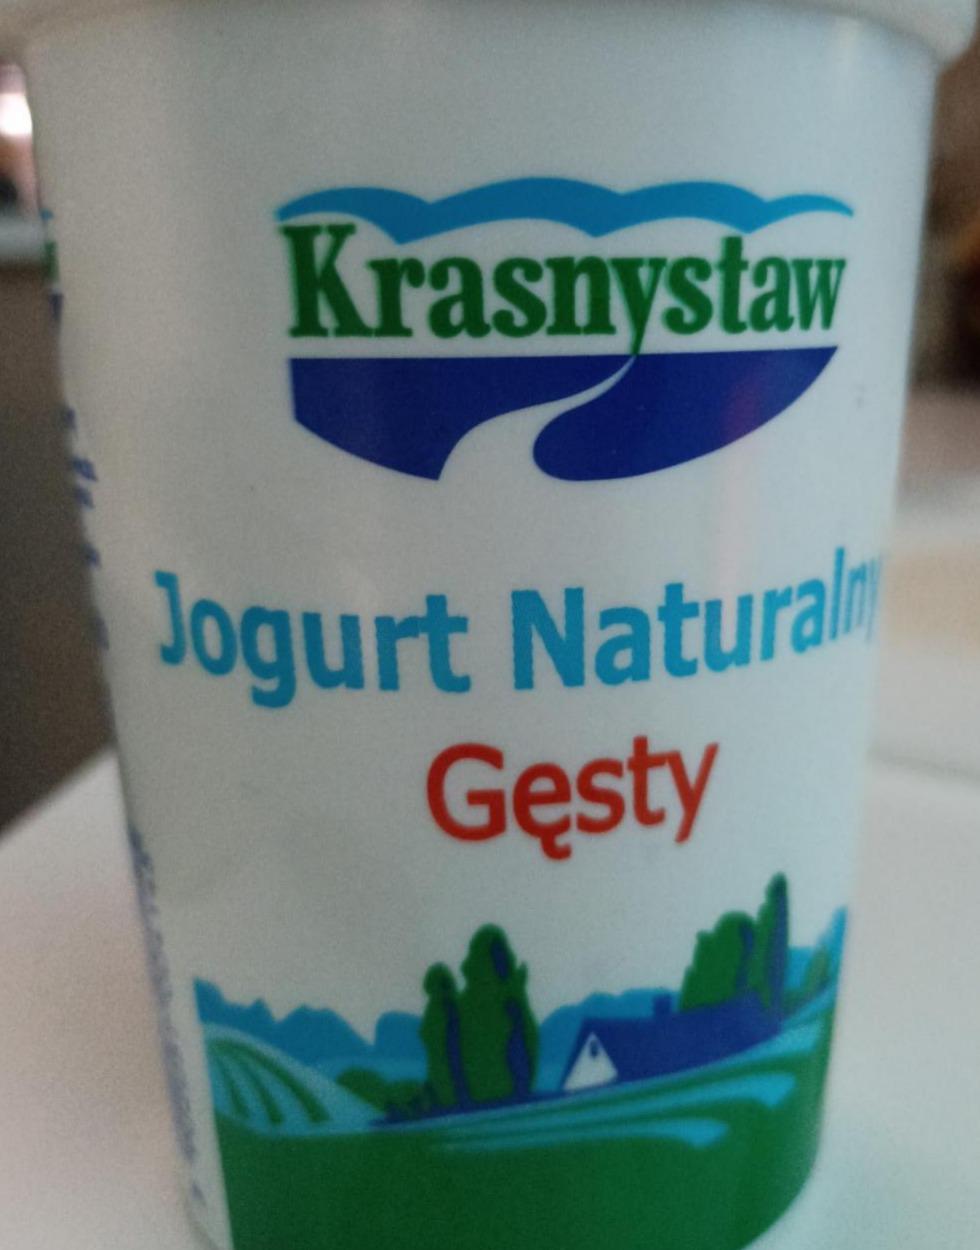 Фото - Йогурт натуральный Jogurt Natyralny Krasnystaw